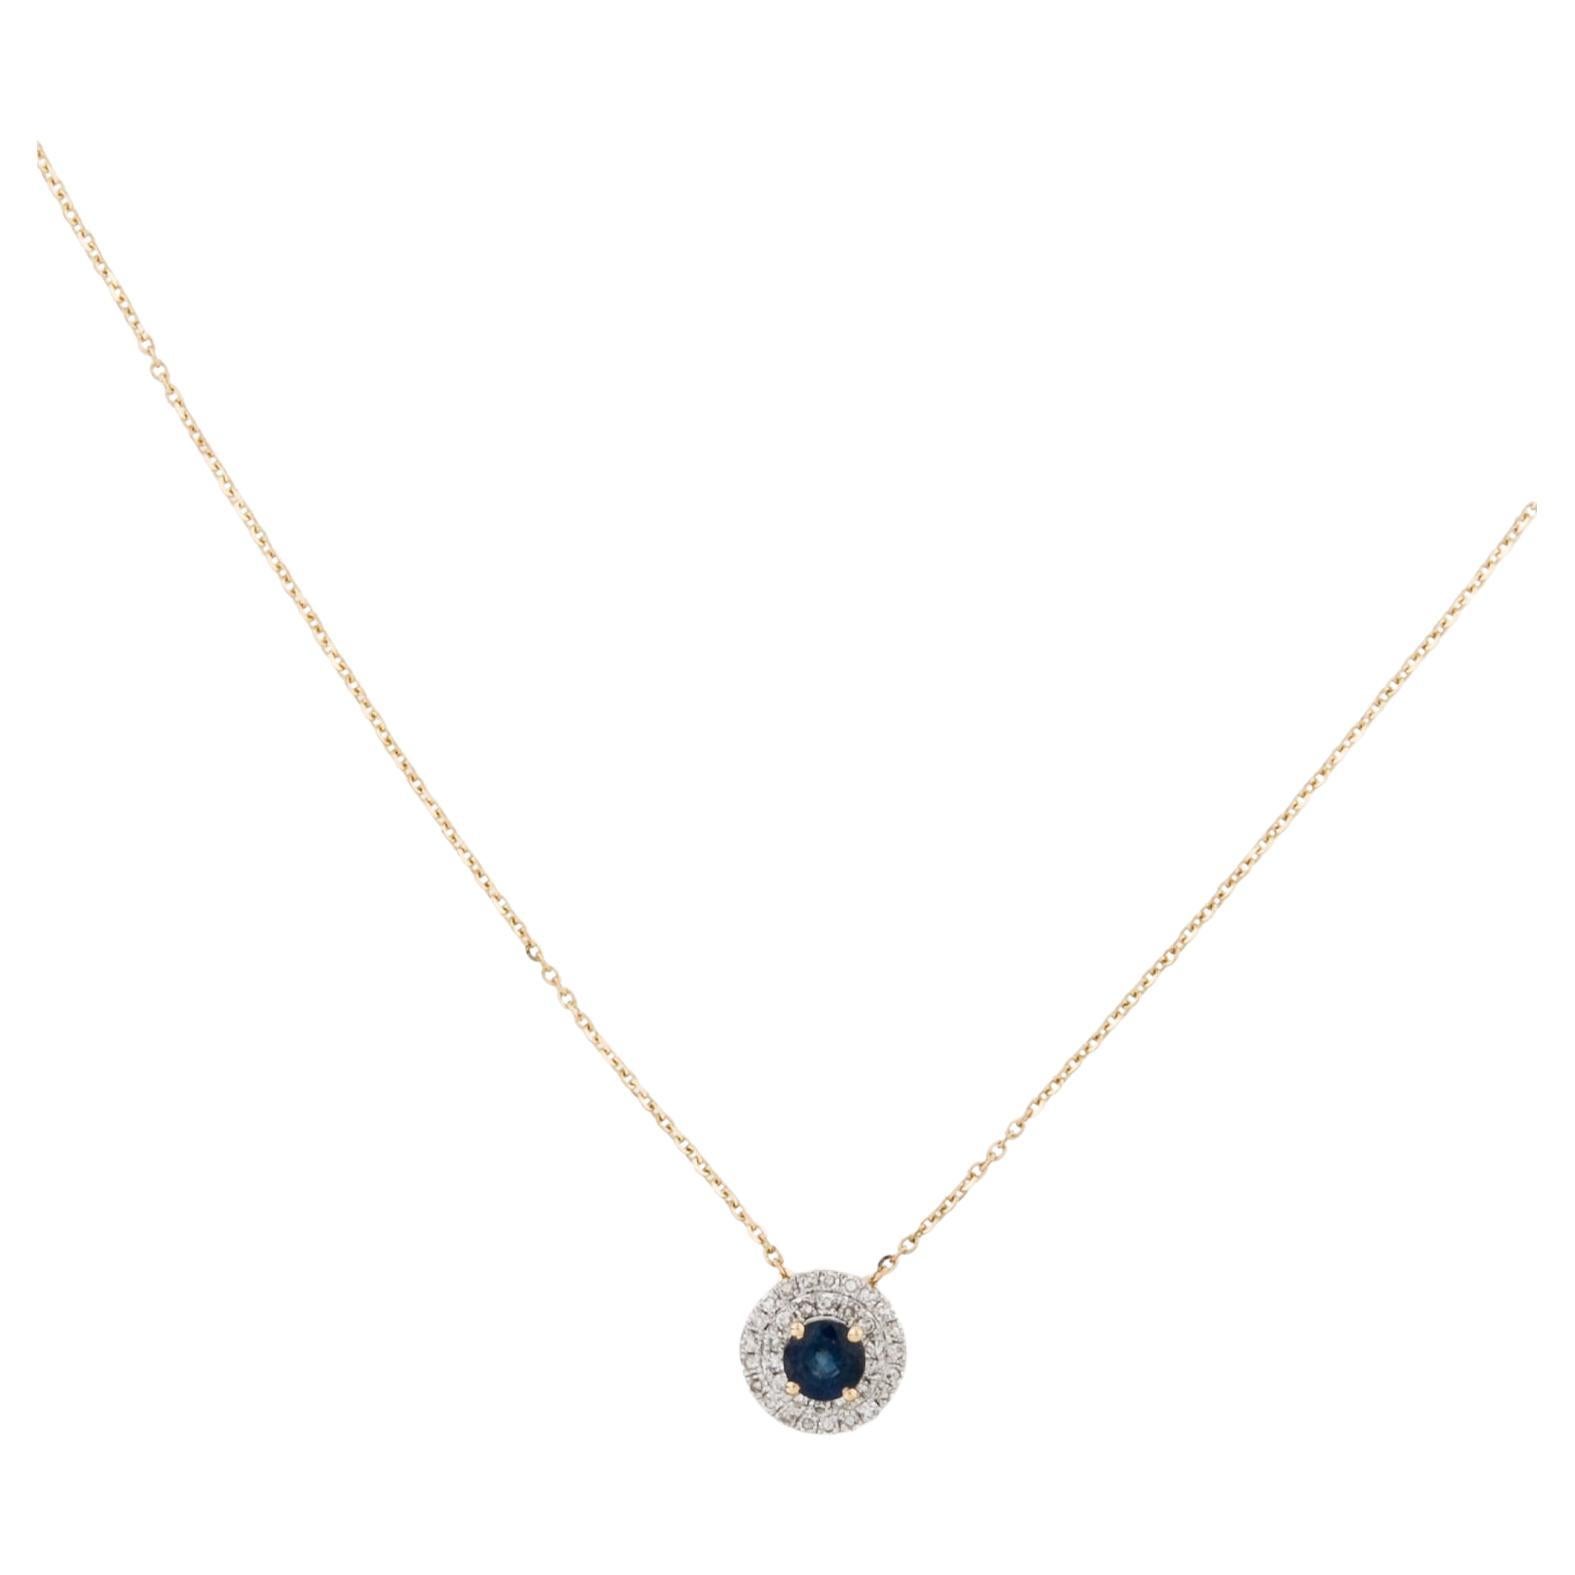 Stunning 14K Sapphire & Diamond Pendant Necklace: Timeless Elegance, Luxury